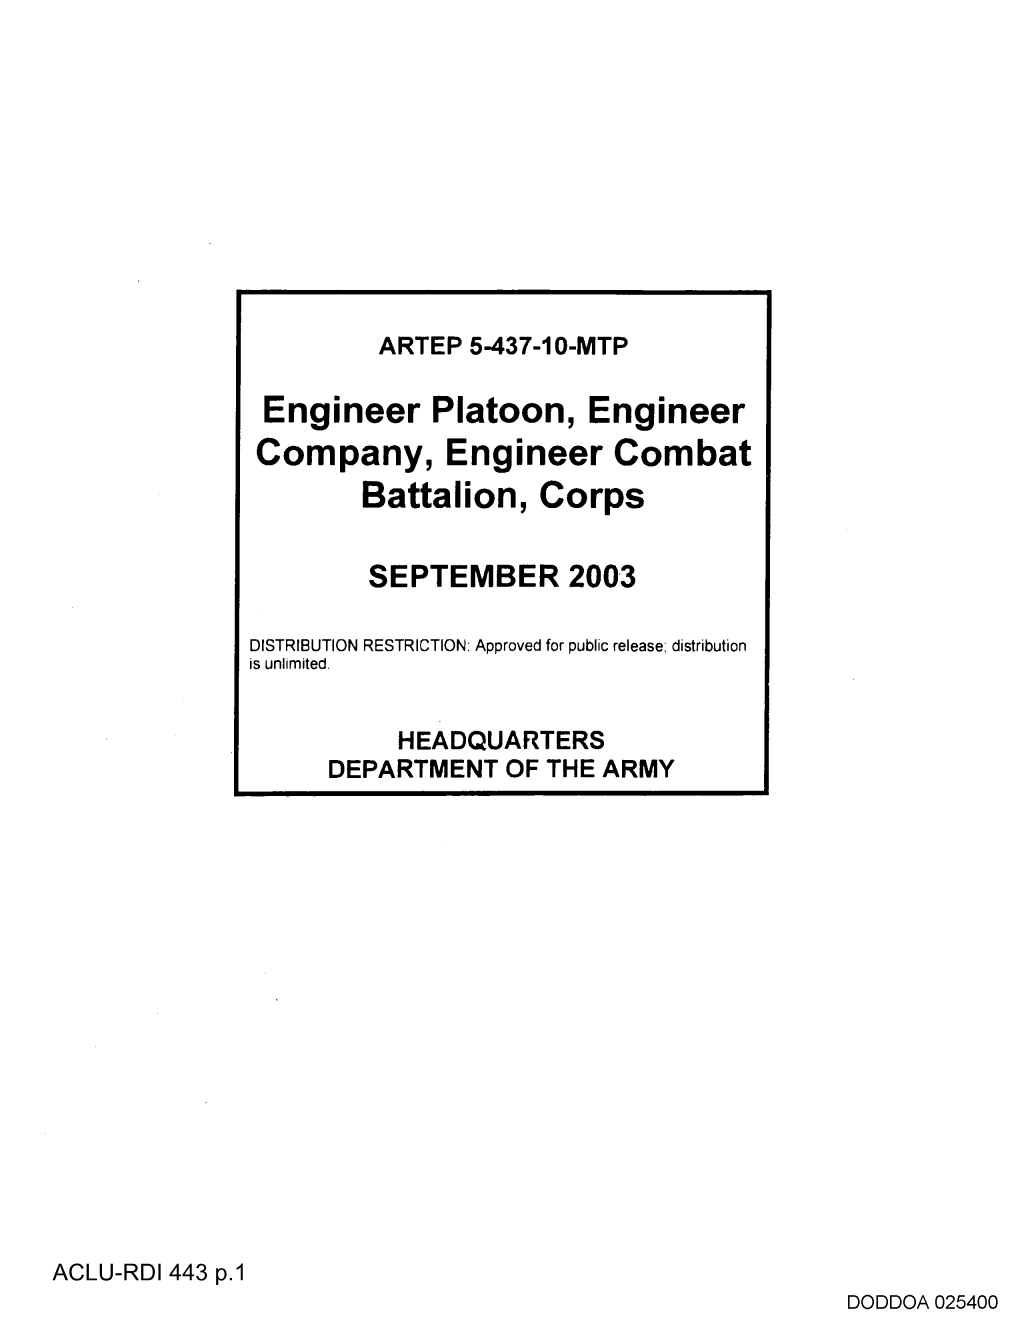 Engineer Platoon, Engineer Company, Engineer Combat Battalion, Corps